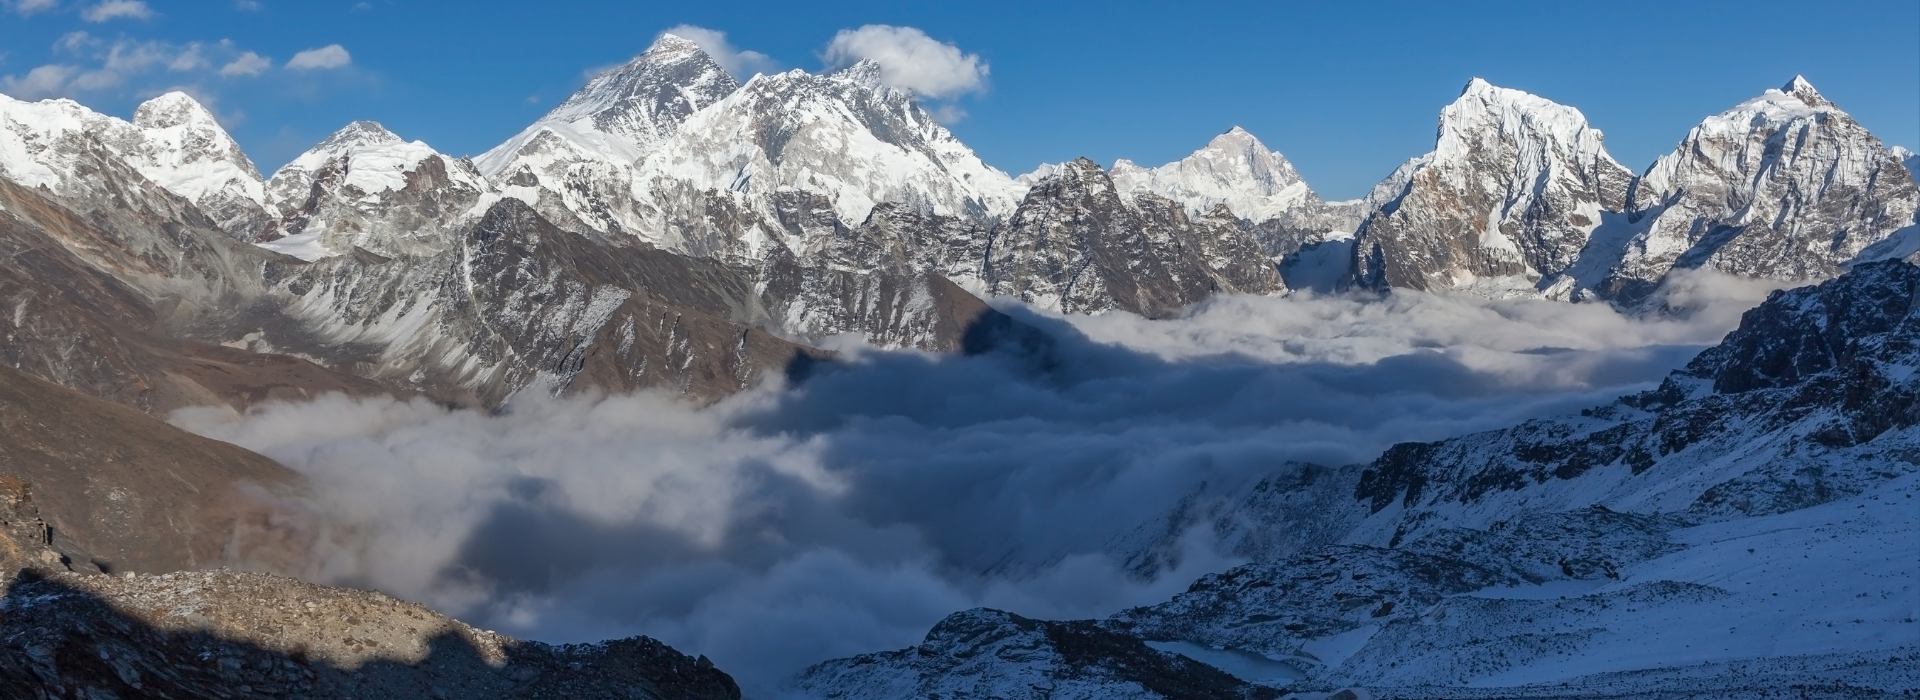 Mount Everest from Renjo La Pass, Nepal